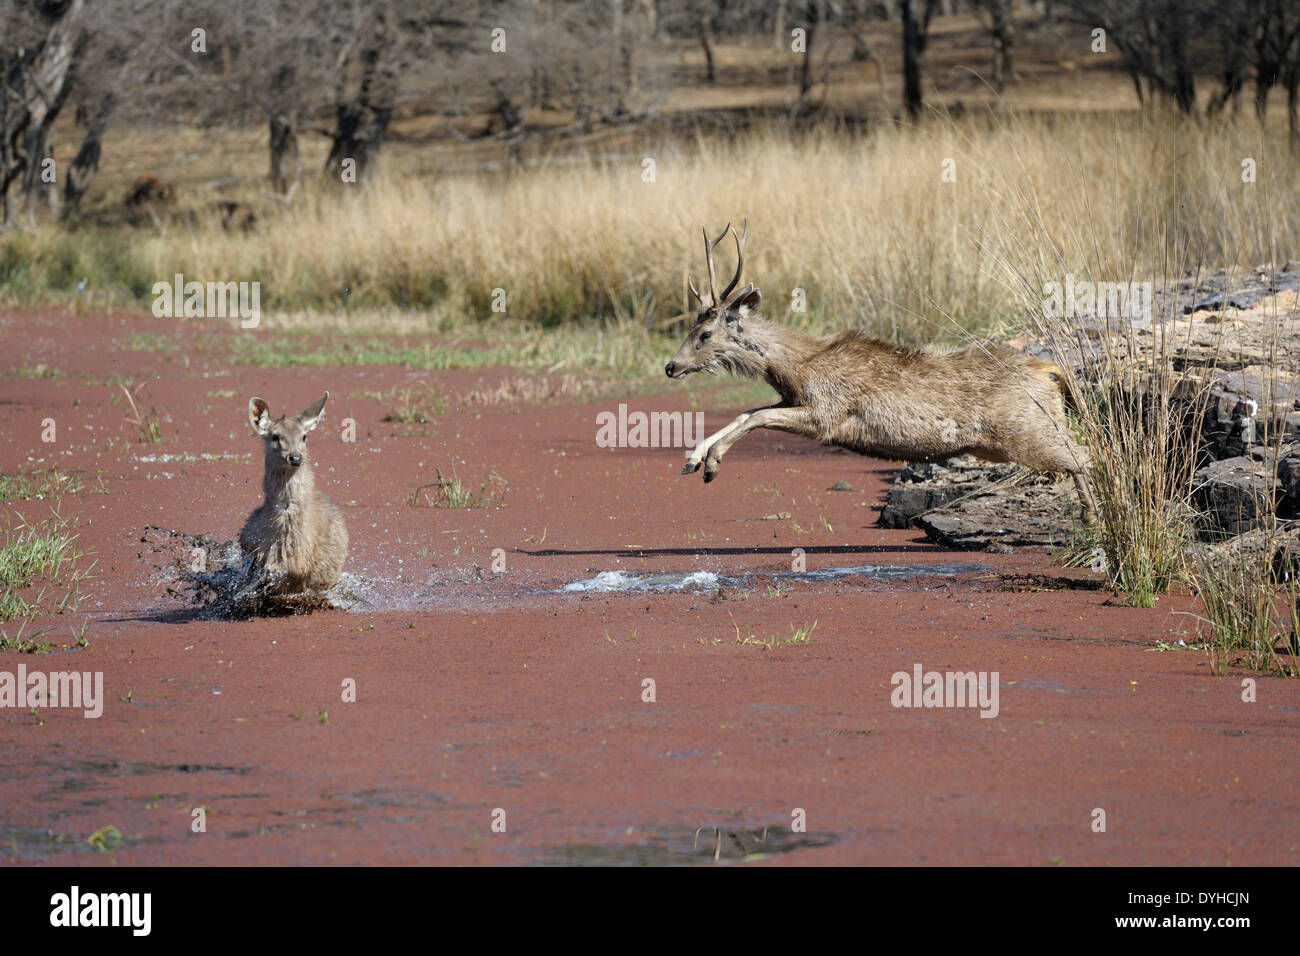 Sambar deer (Rusa unicolor) jumping in water. Stock Photo